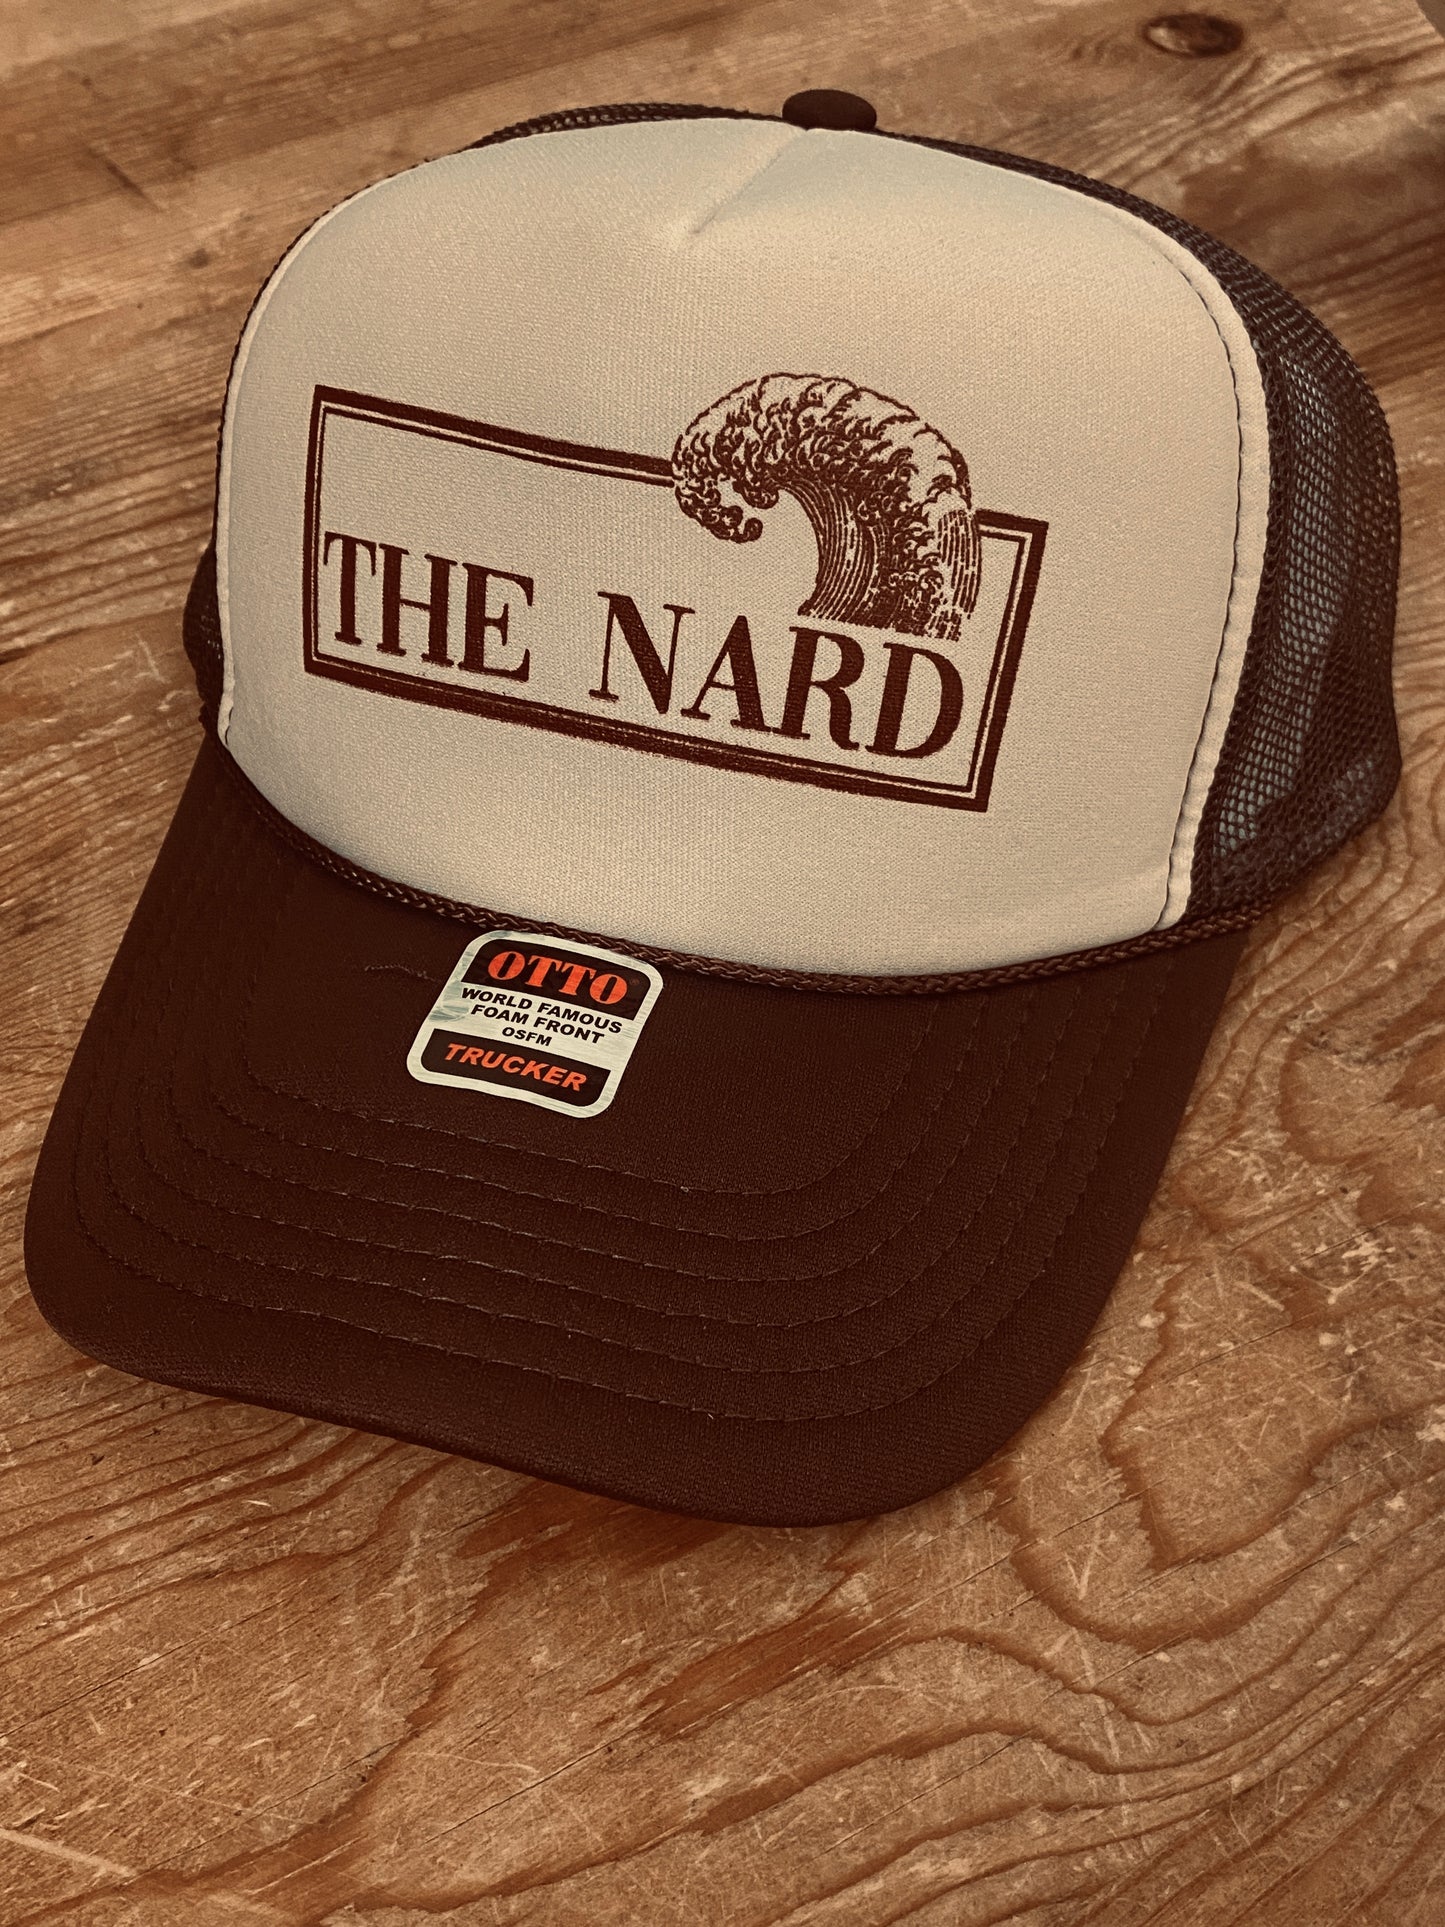 The Nard trucker hat